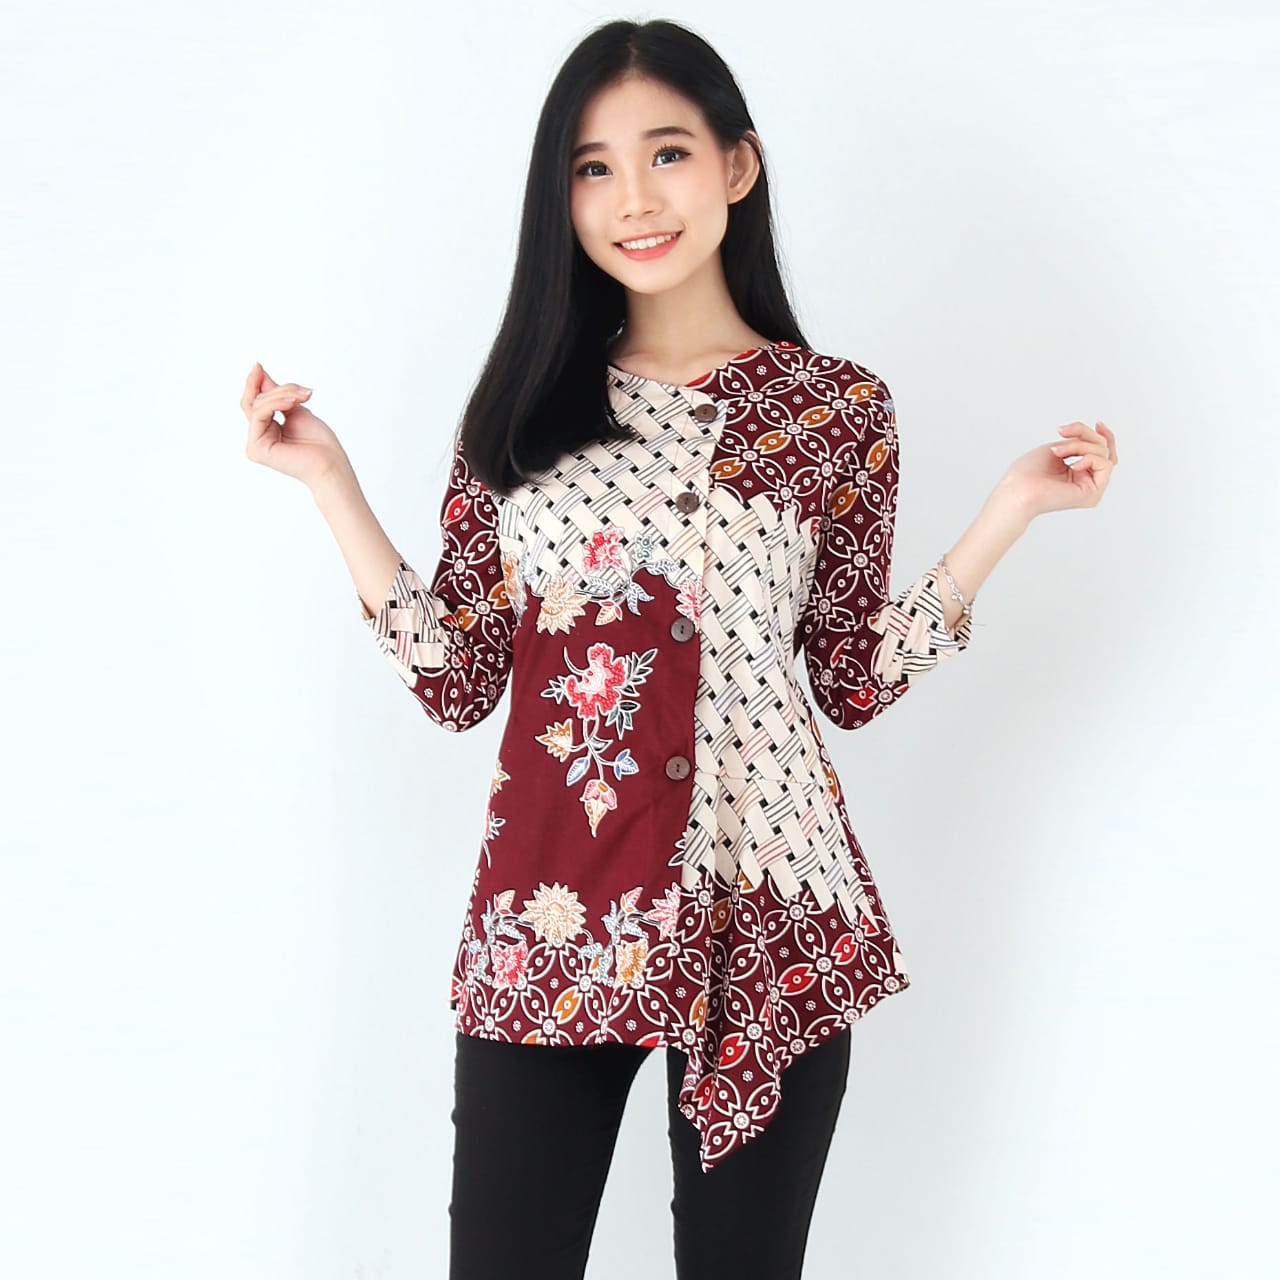  Model  Baju  Batik Atasan Lengan  7 8 Jual Blouse Batik Wanita Atasan Batik Wanita Kutubaru 